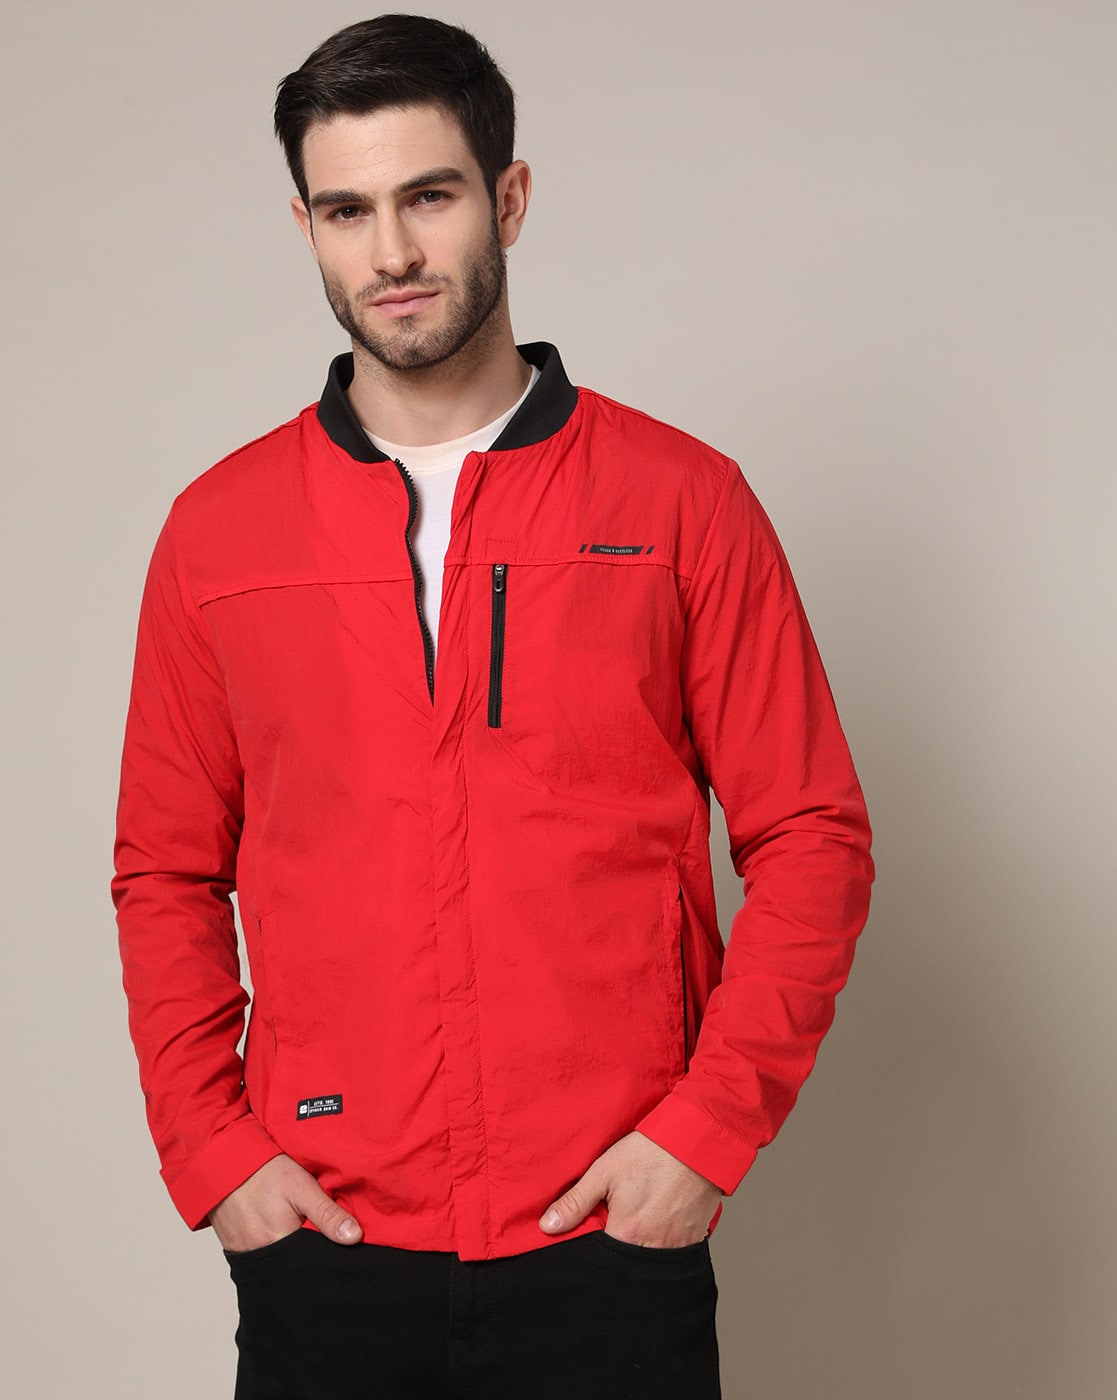 Snow technical jacket EA7 Emporio Armani 6LTG15 TN45Z high-risk red color